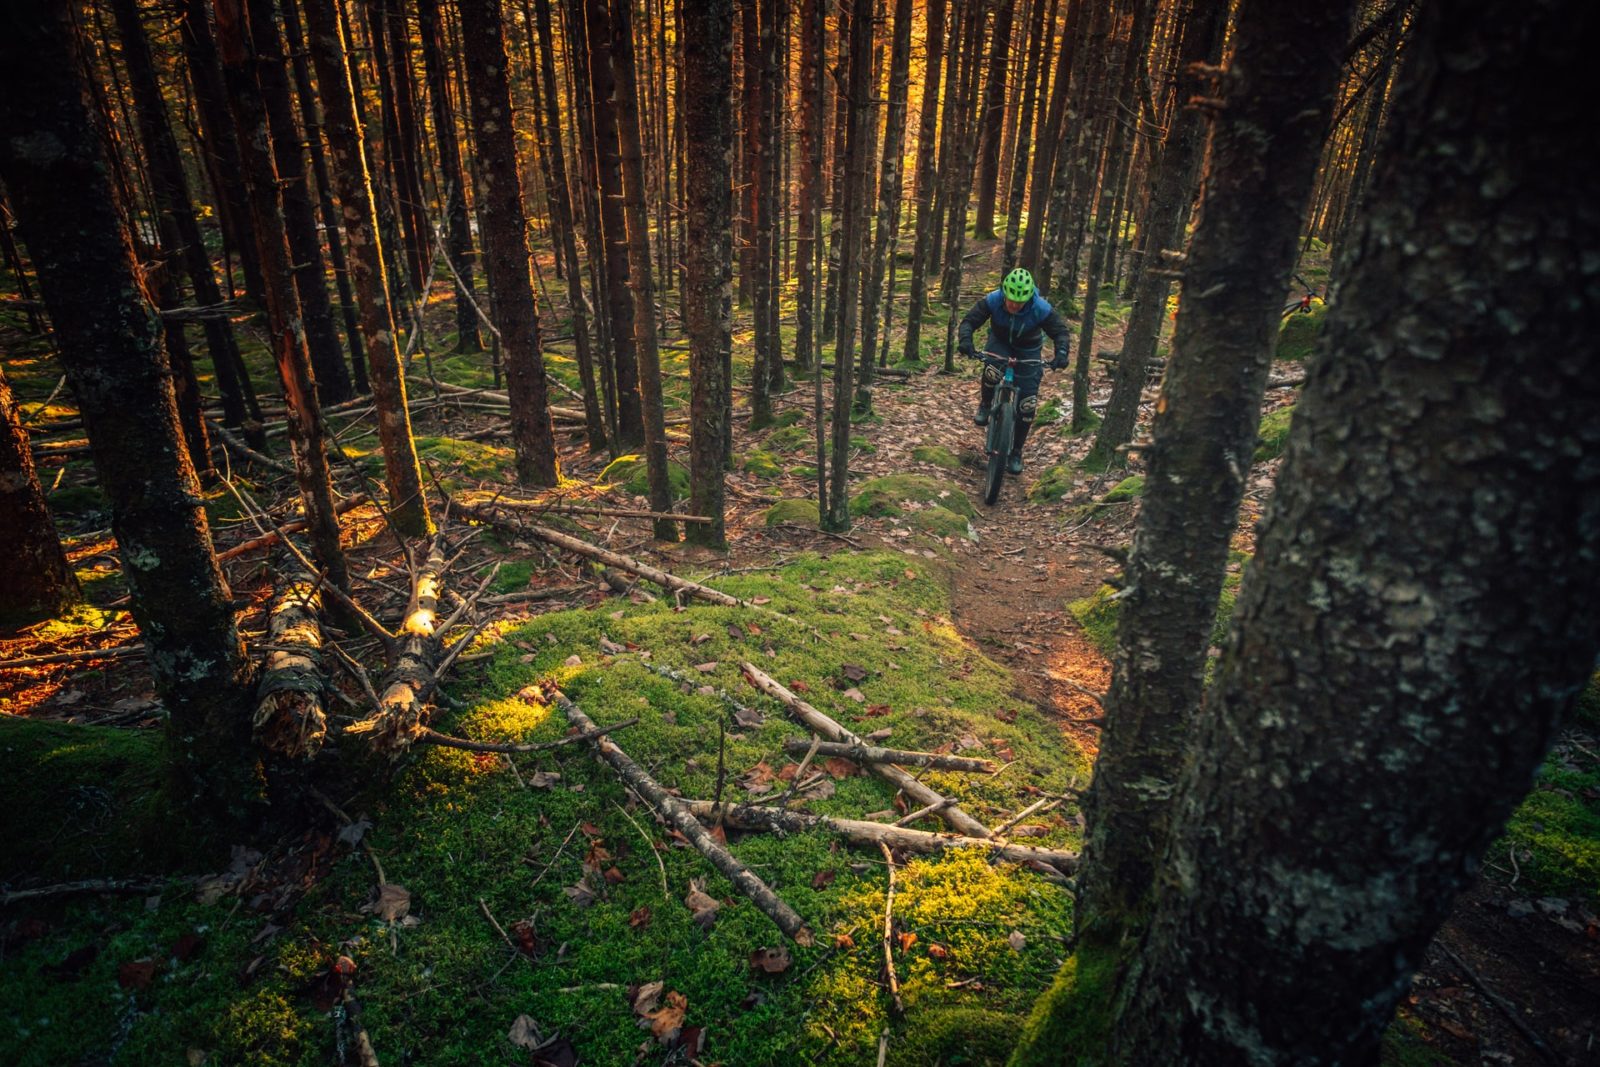 Mountain biking through the woods